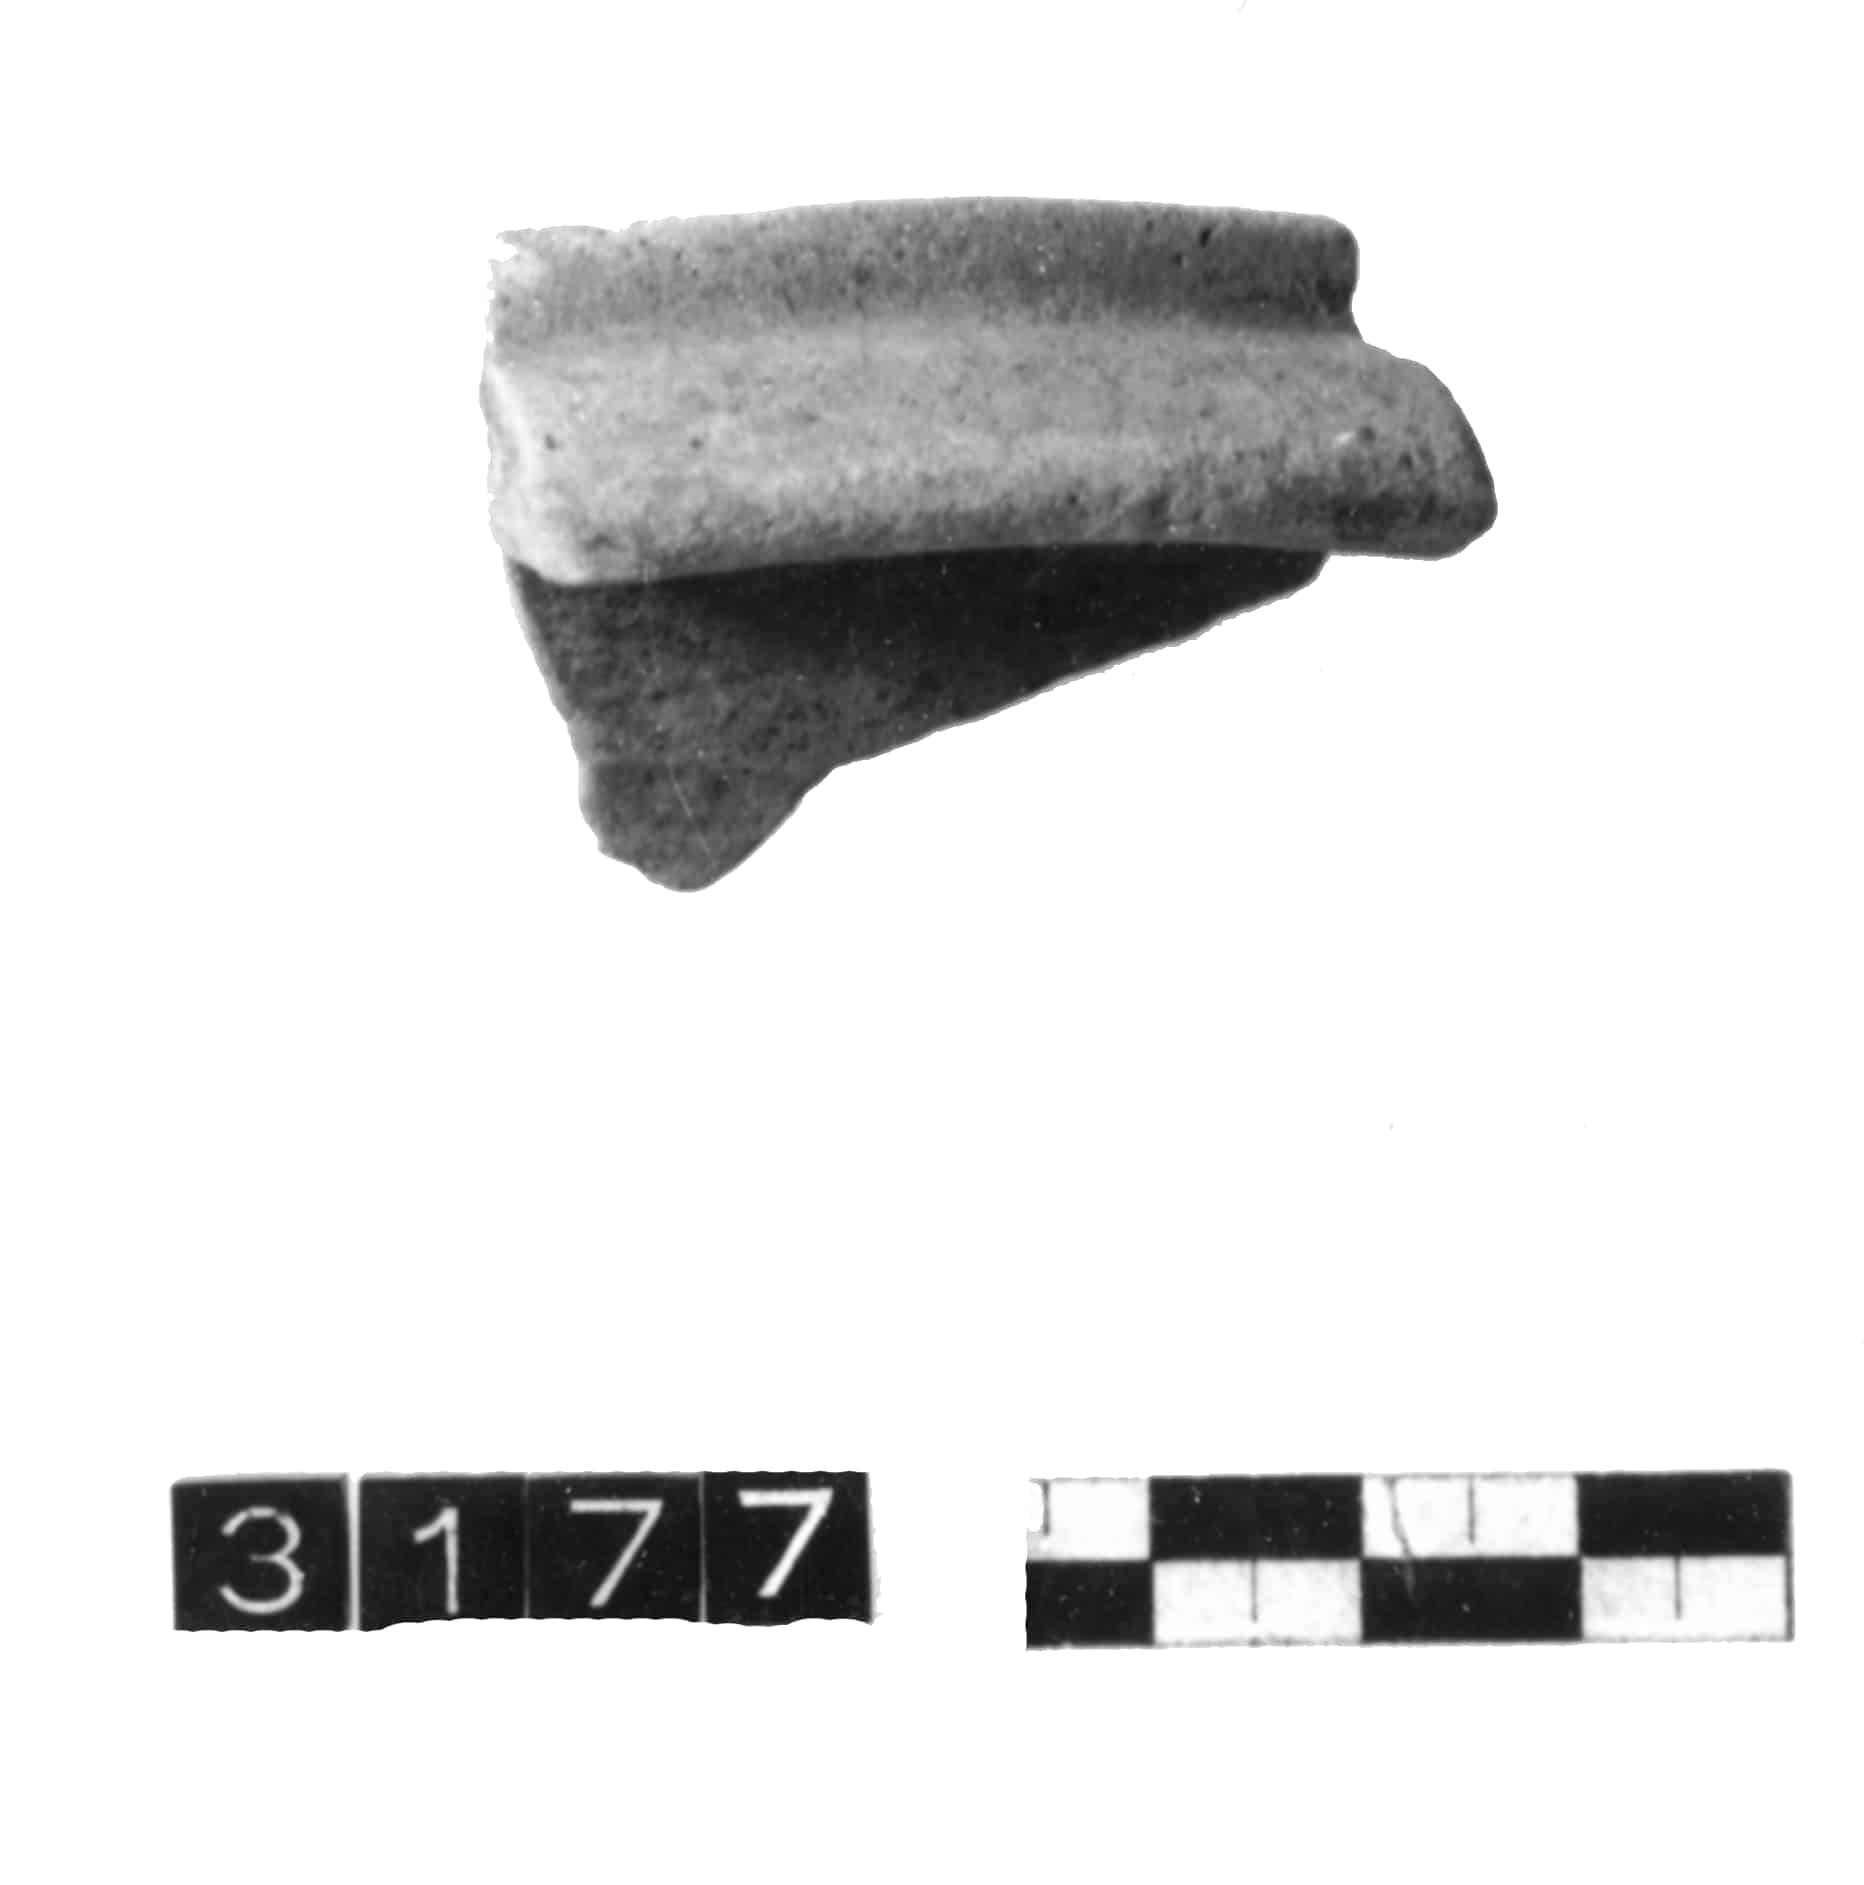 coppa, Lamboglia forma 24/25 (IV - V sec. d.c)